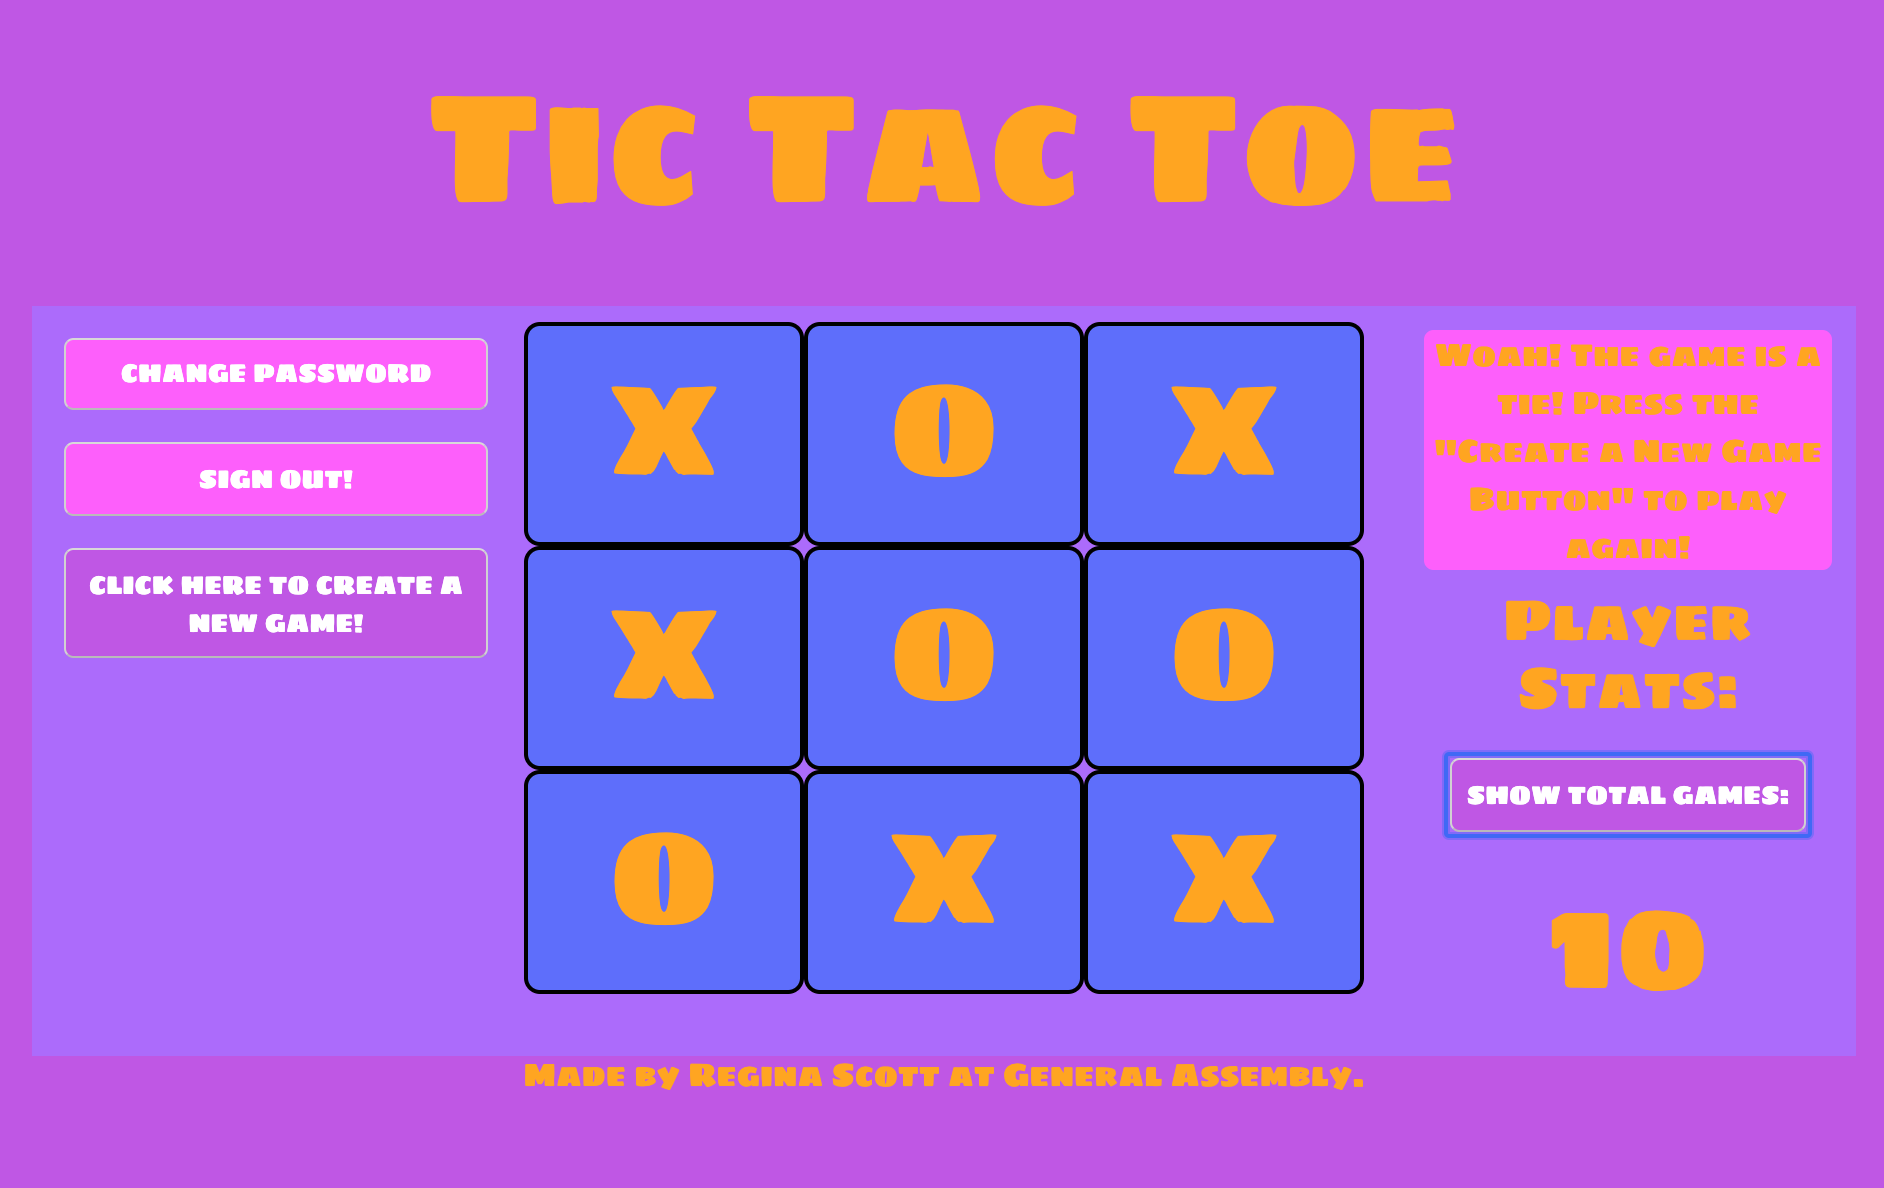 Tic-Tac-Toe Game In JavaScript - CopyAssignment